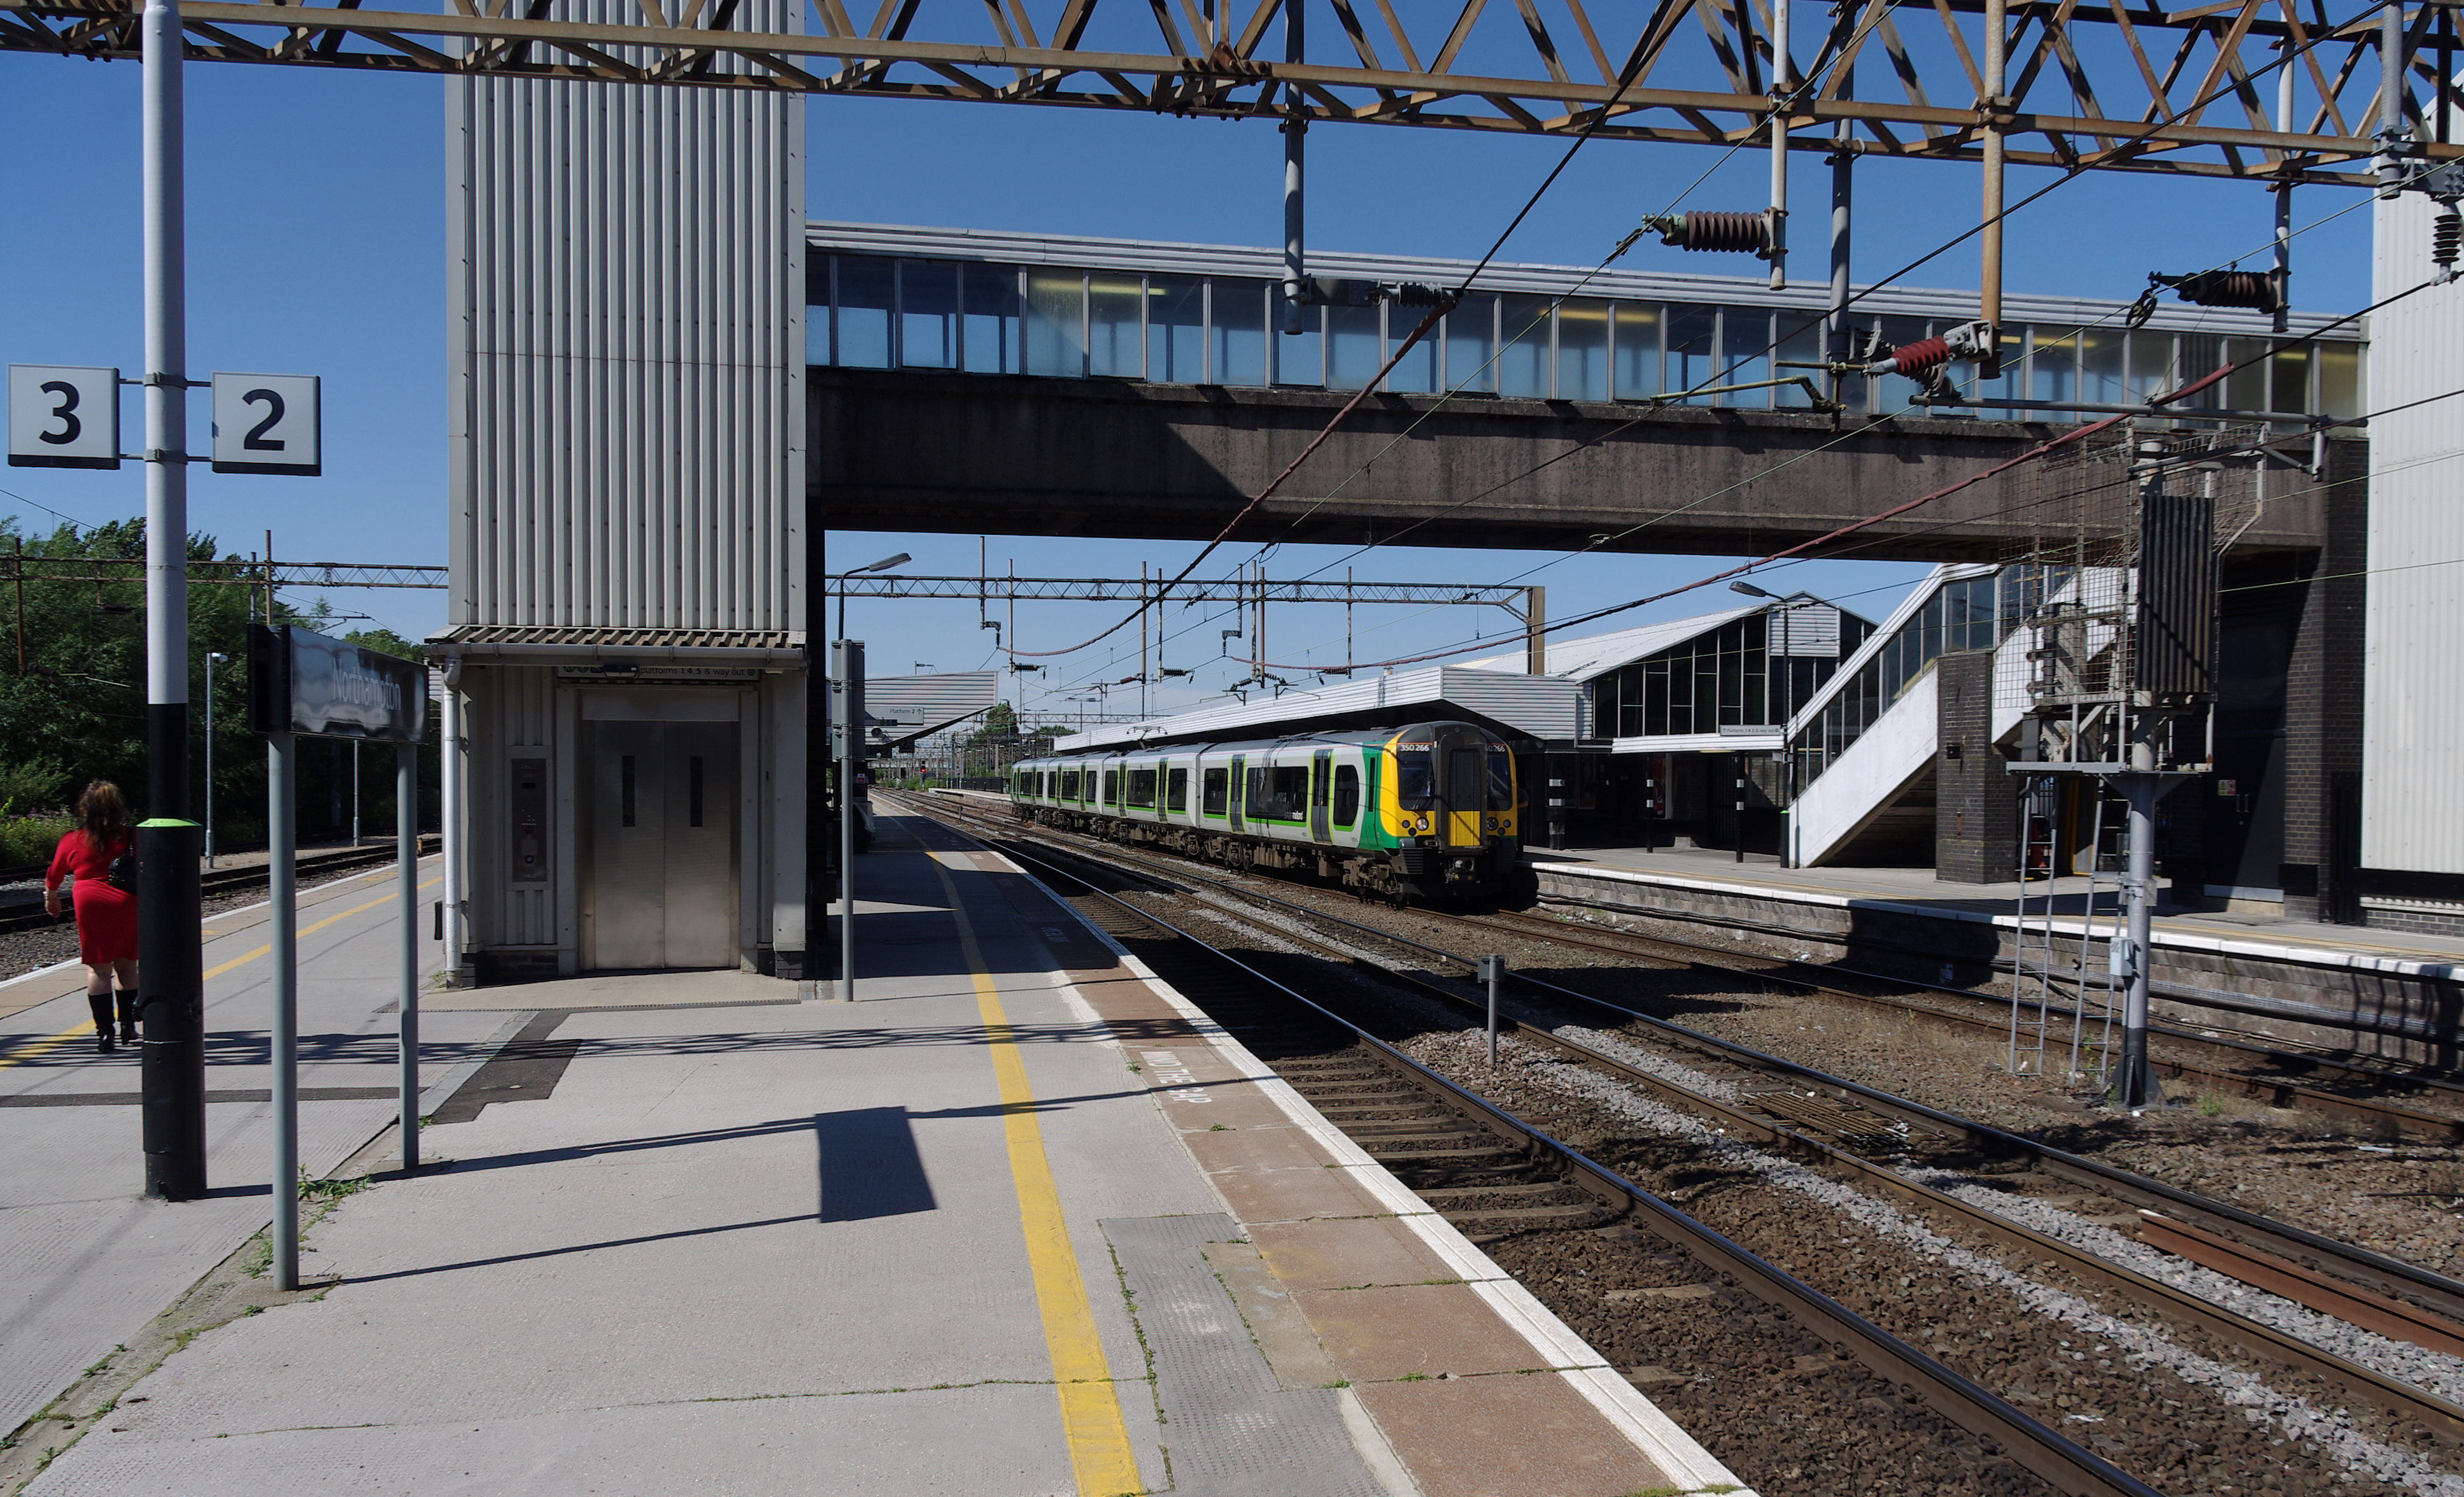 Northampton railway station - Wikipedia